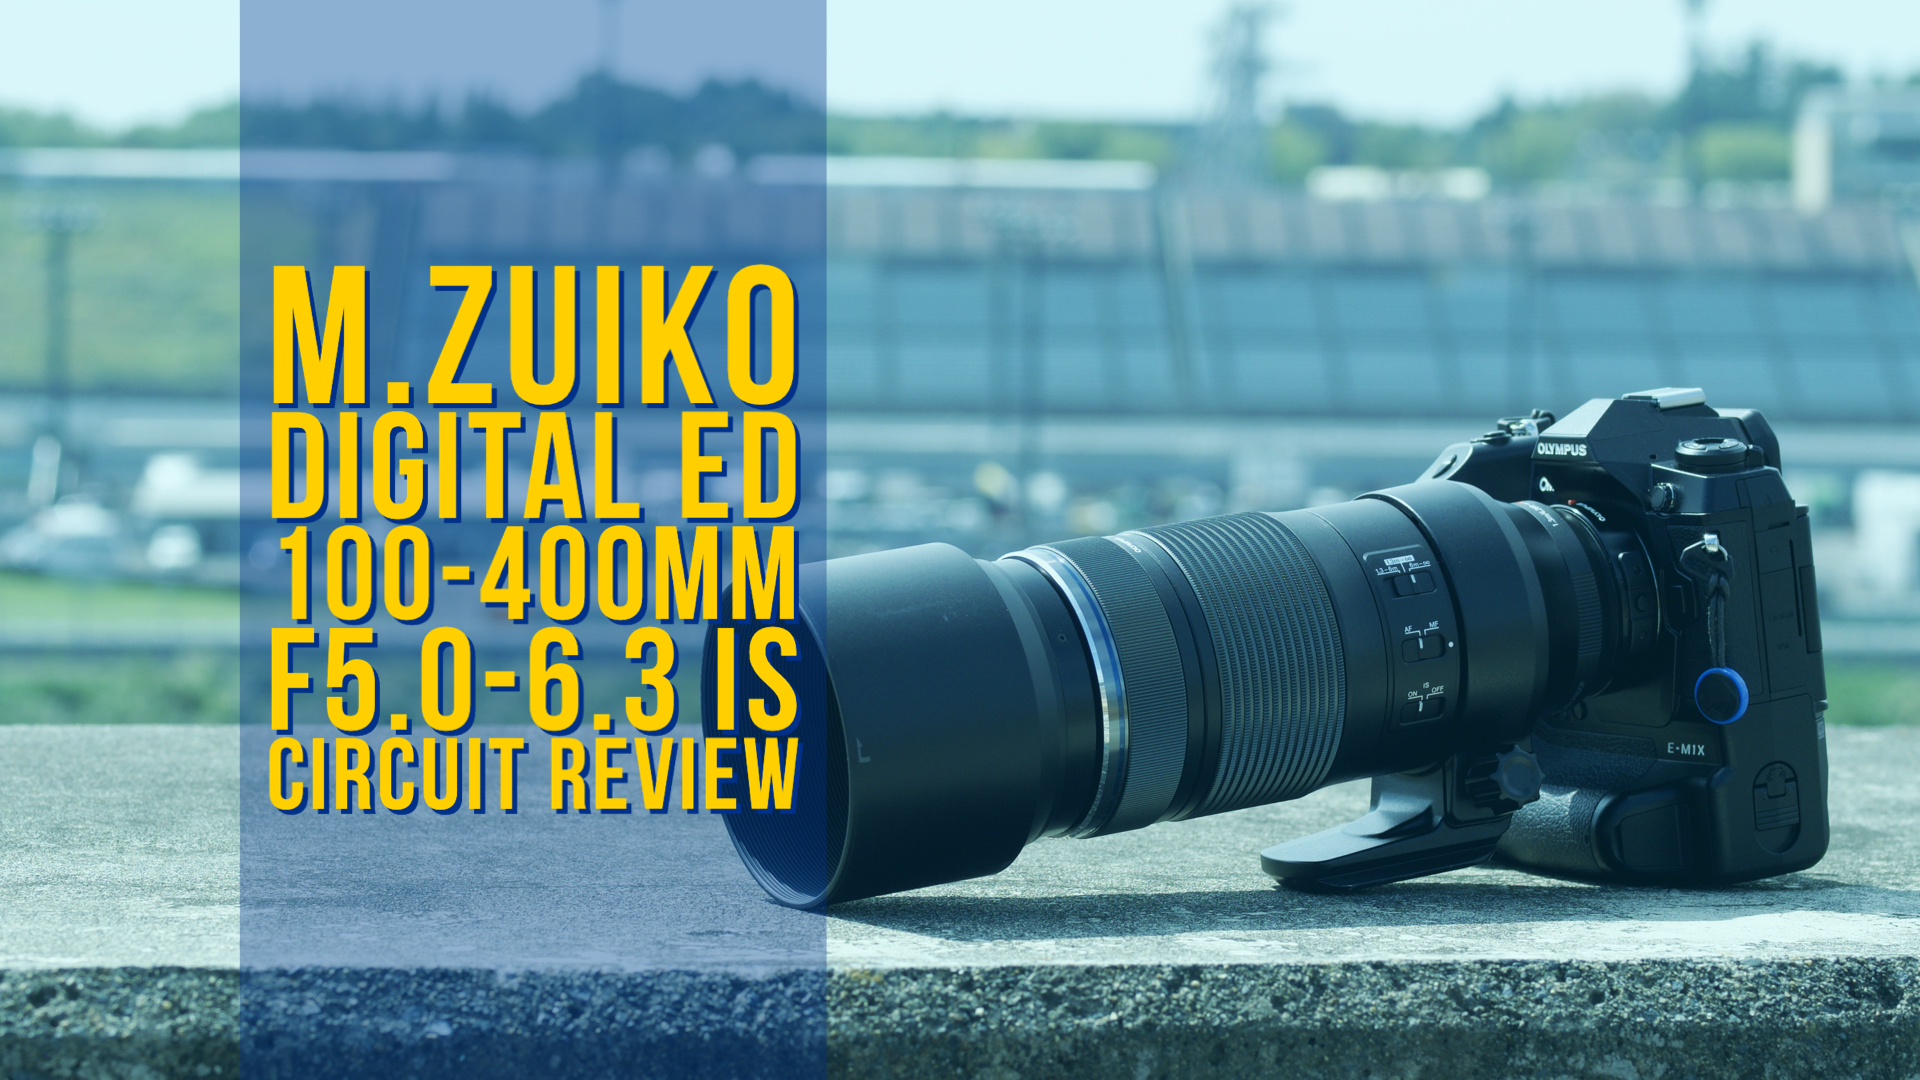 M.ZUIKO DIGITAL ED 100-400mm F5.0-6.3 ISレビュー(2)サーキット実写 